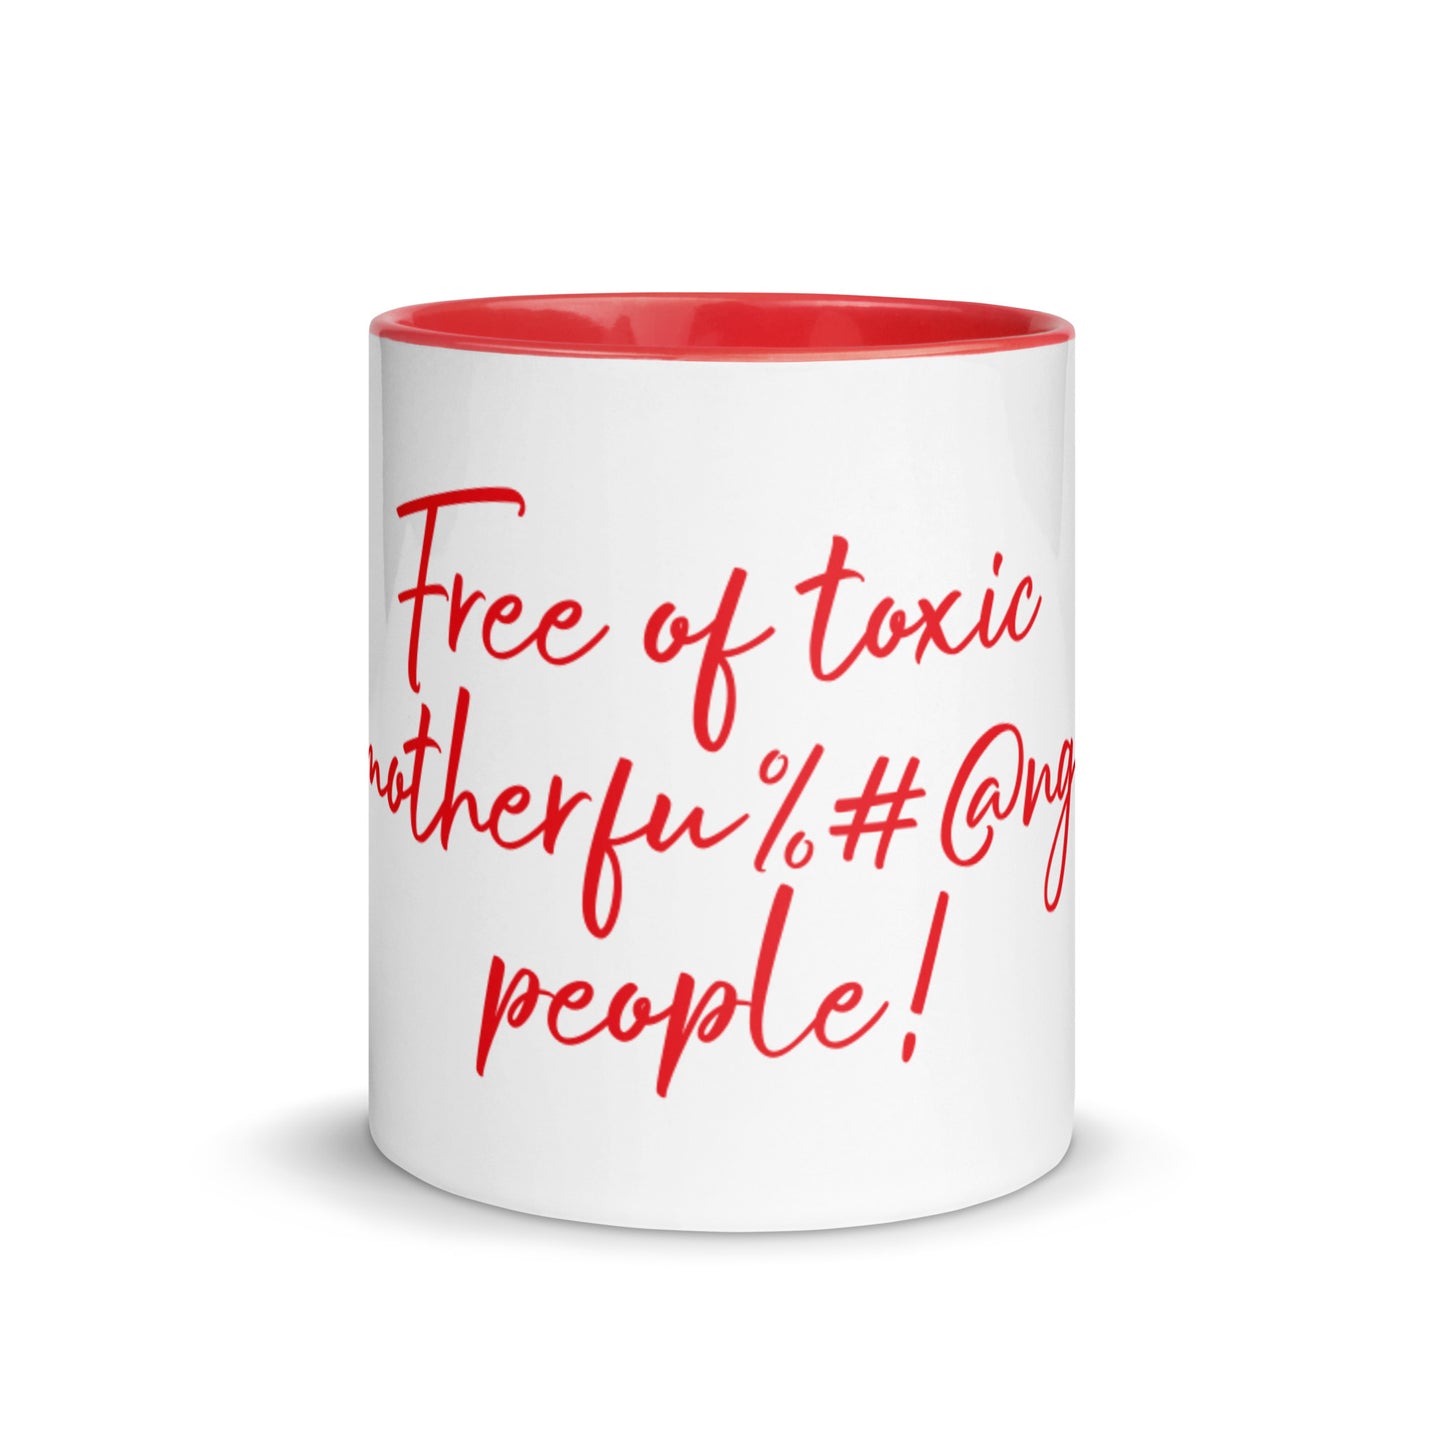 White Color Mug - Free of toxic #$% people!